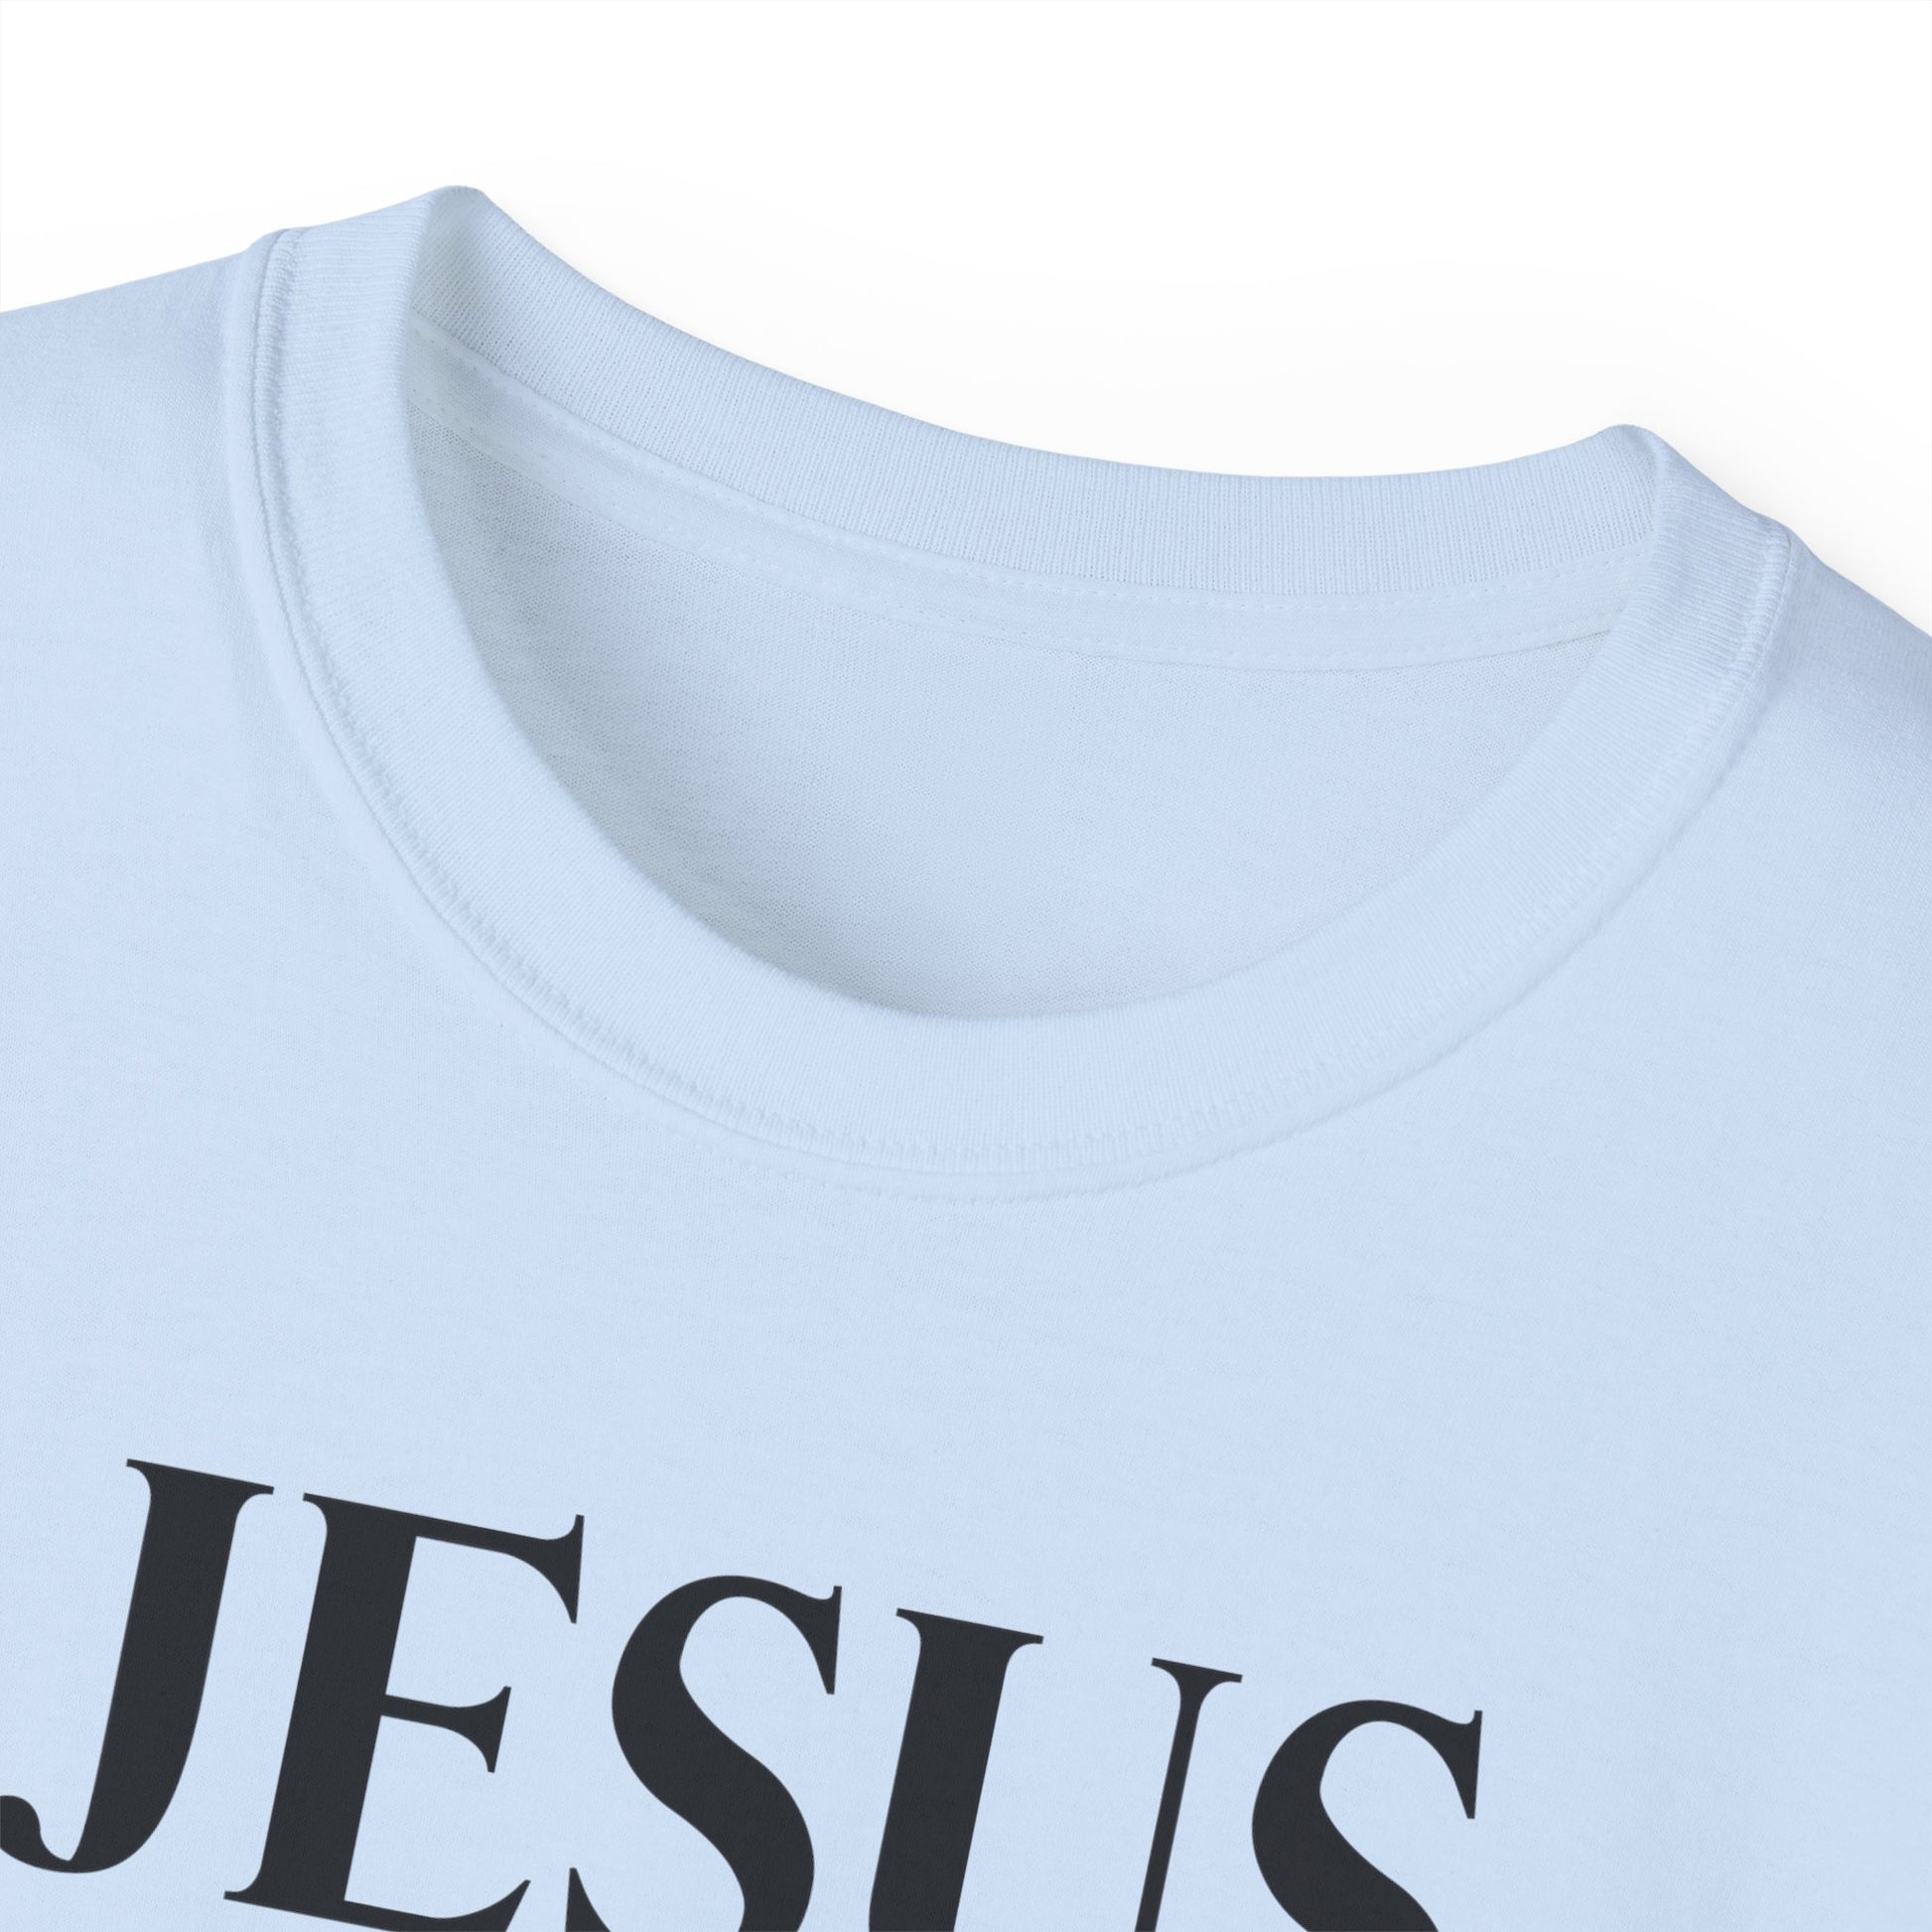 Jesus Did It (like Nike) Funny Unisex Christian Ultra Cotton Tee Printify